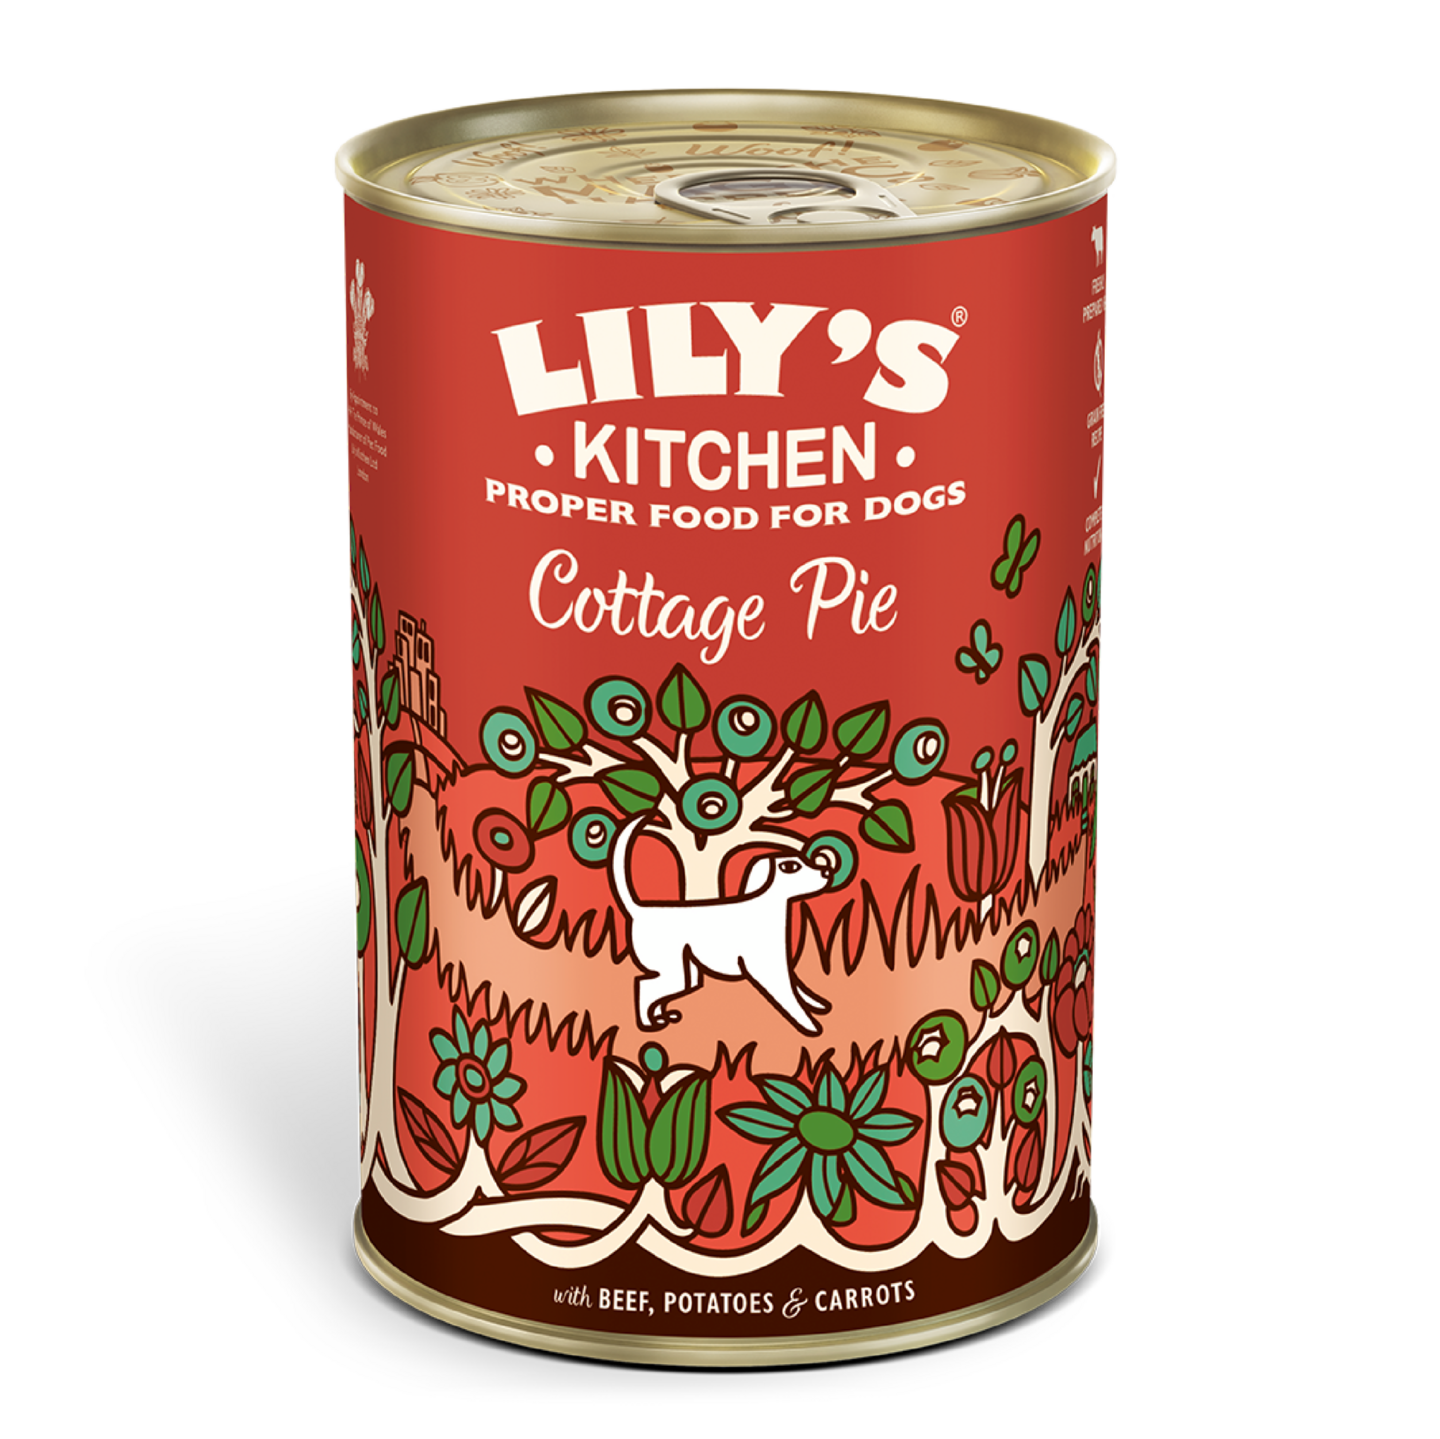 Lilys Kitchen 400g Cottage Pie koiranruoka nauta